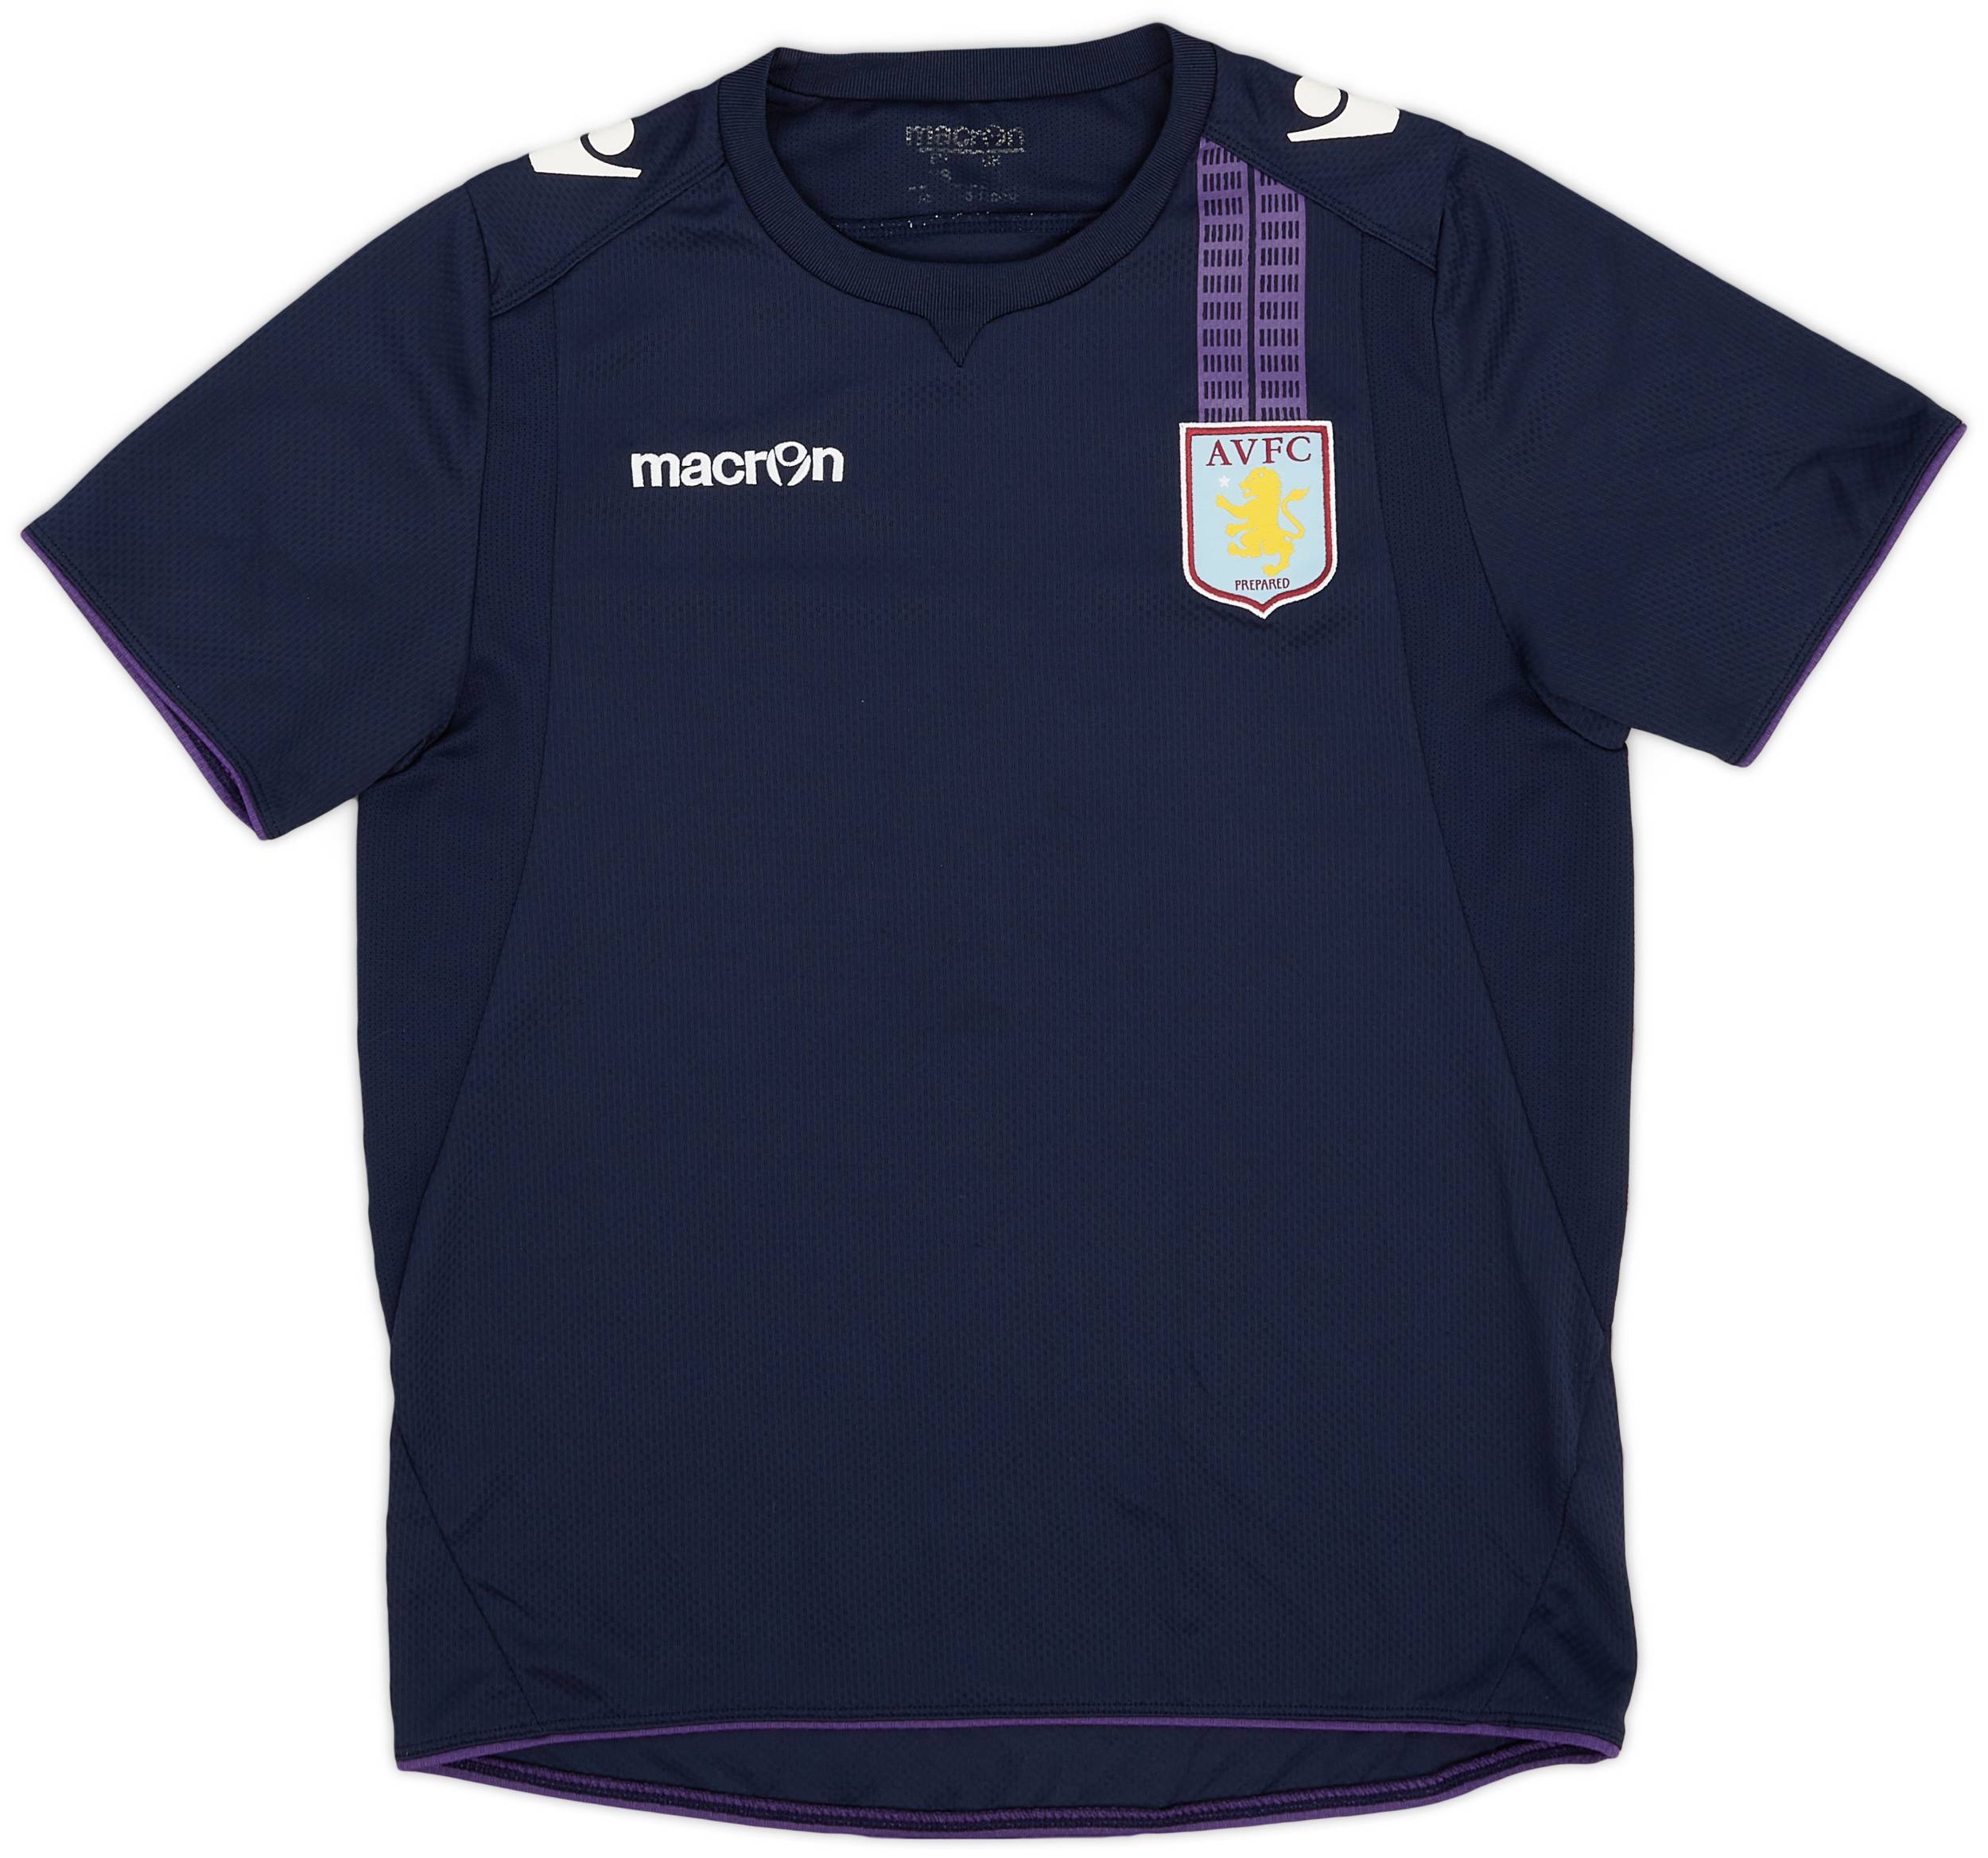 2012-13 Aston Villa Macron Training Shirt - 8/10 - (XS)